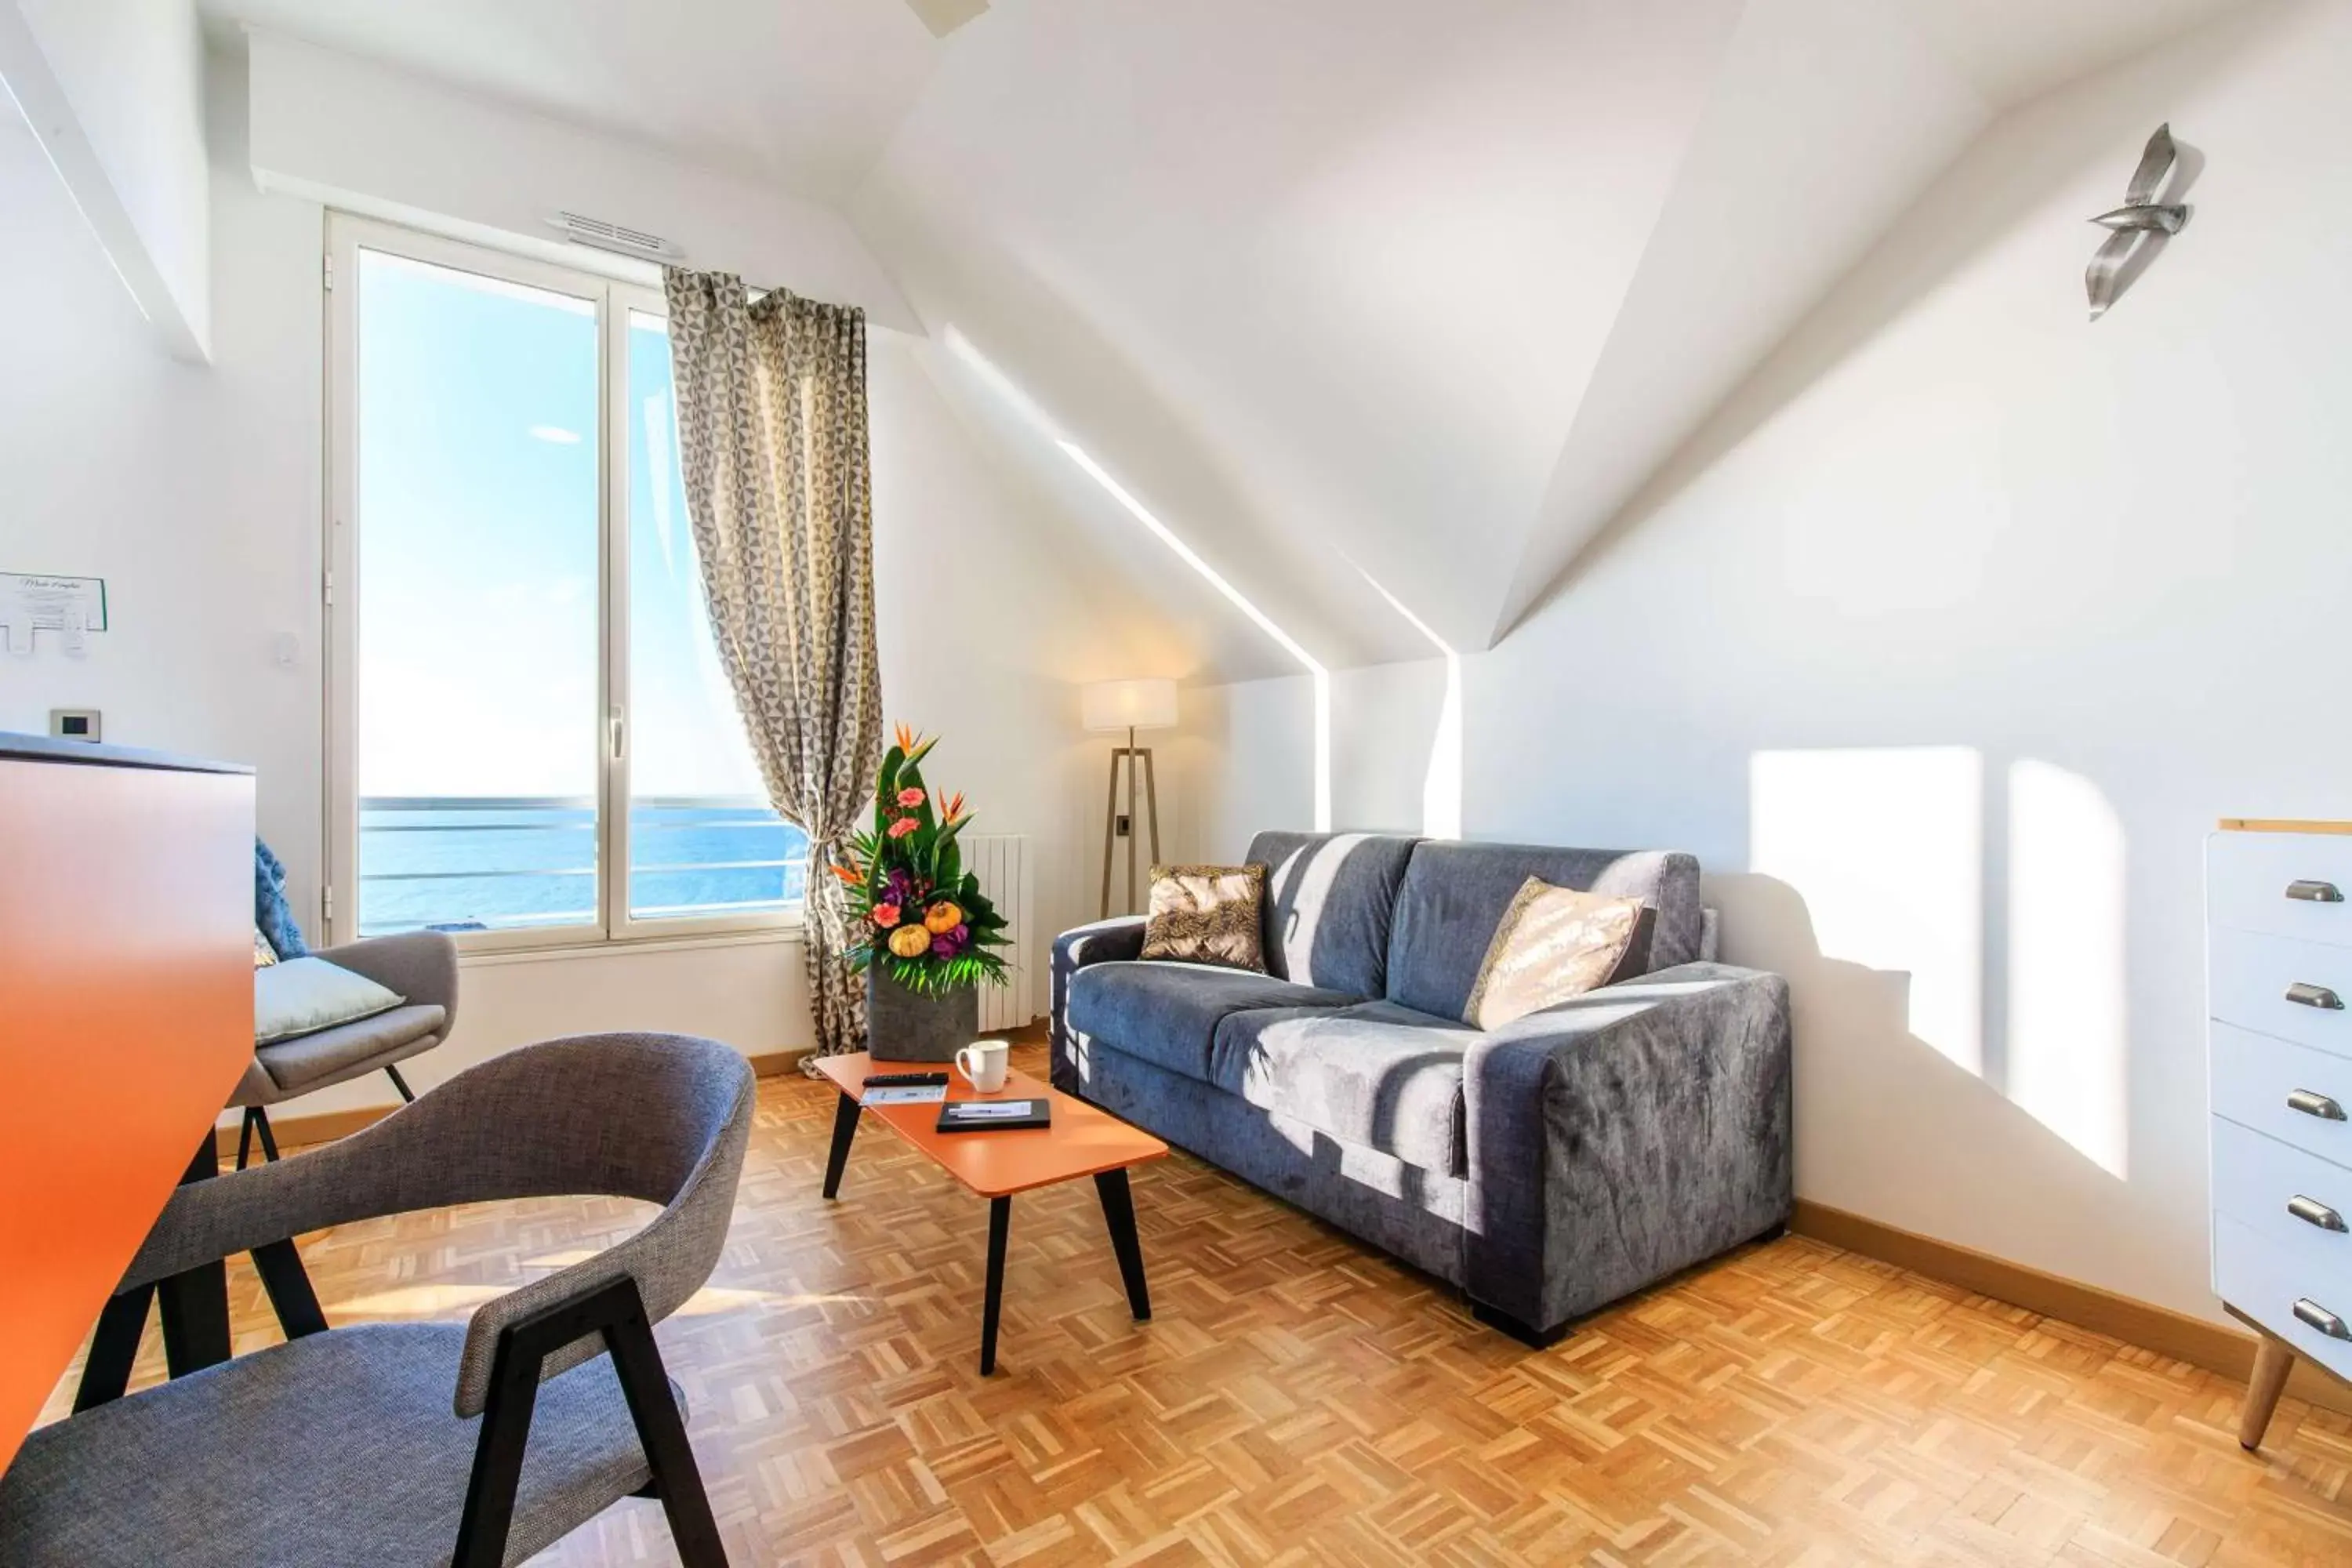 Photo of the whole room, Seating Area in Best Western Hotel De La Plage Saint Marc sur Mer